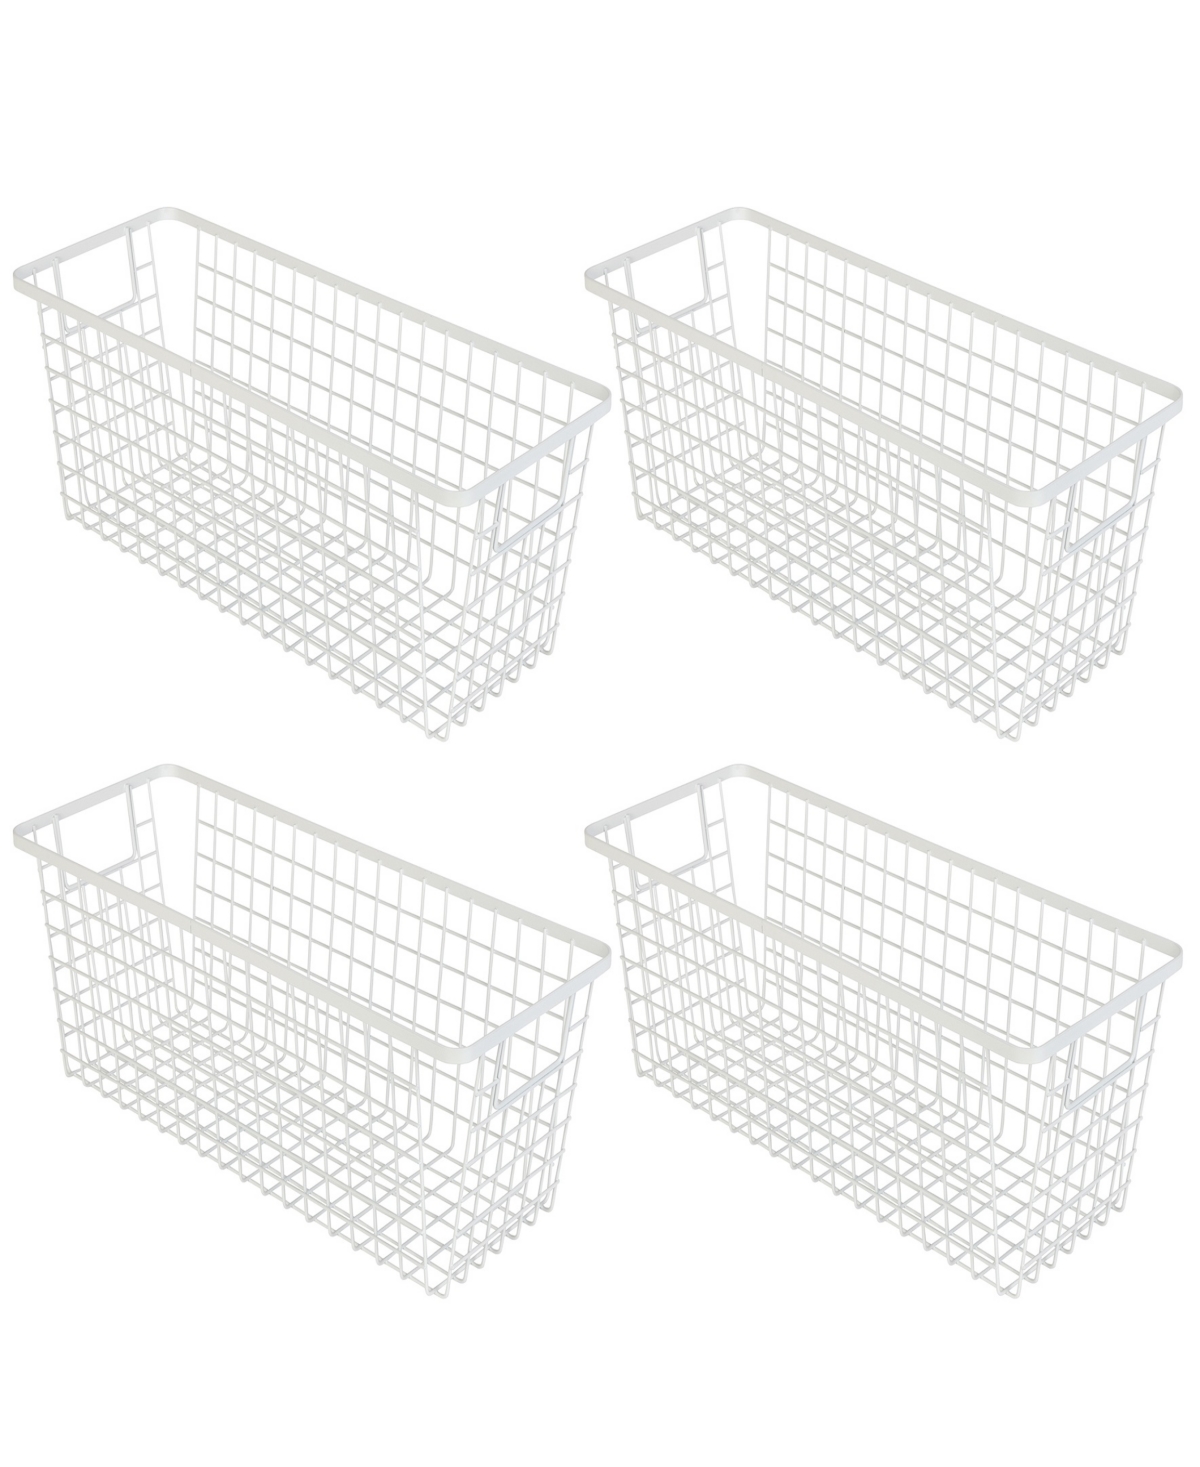 Nestable 6" x 16" x 6" Basket Organizer with Handles, Set of 4 - White